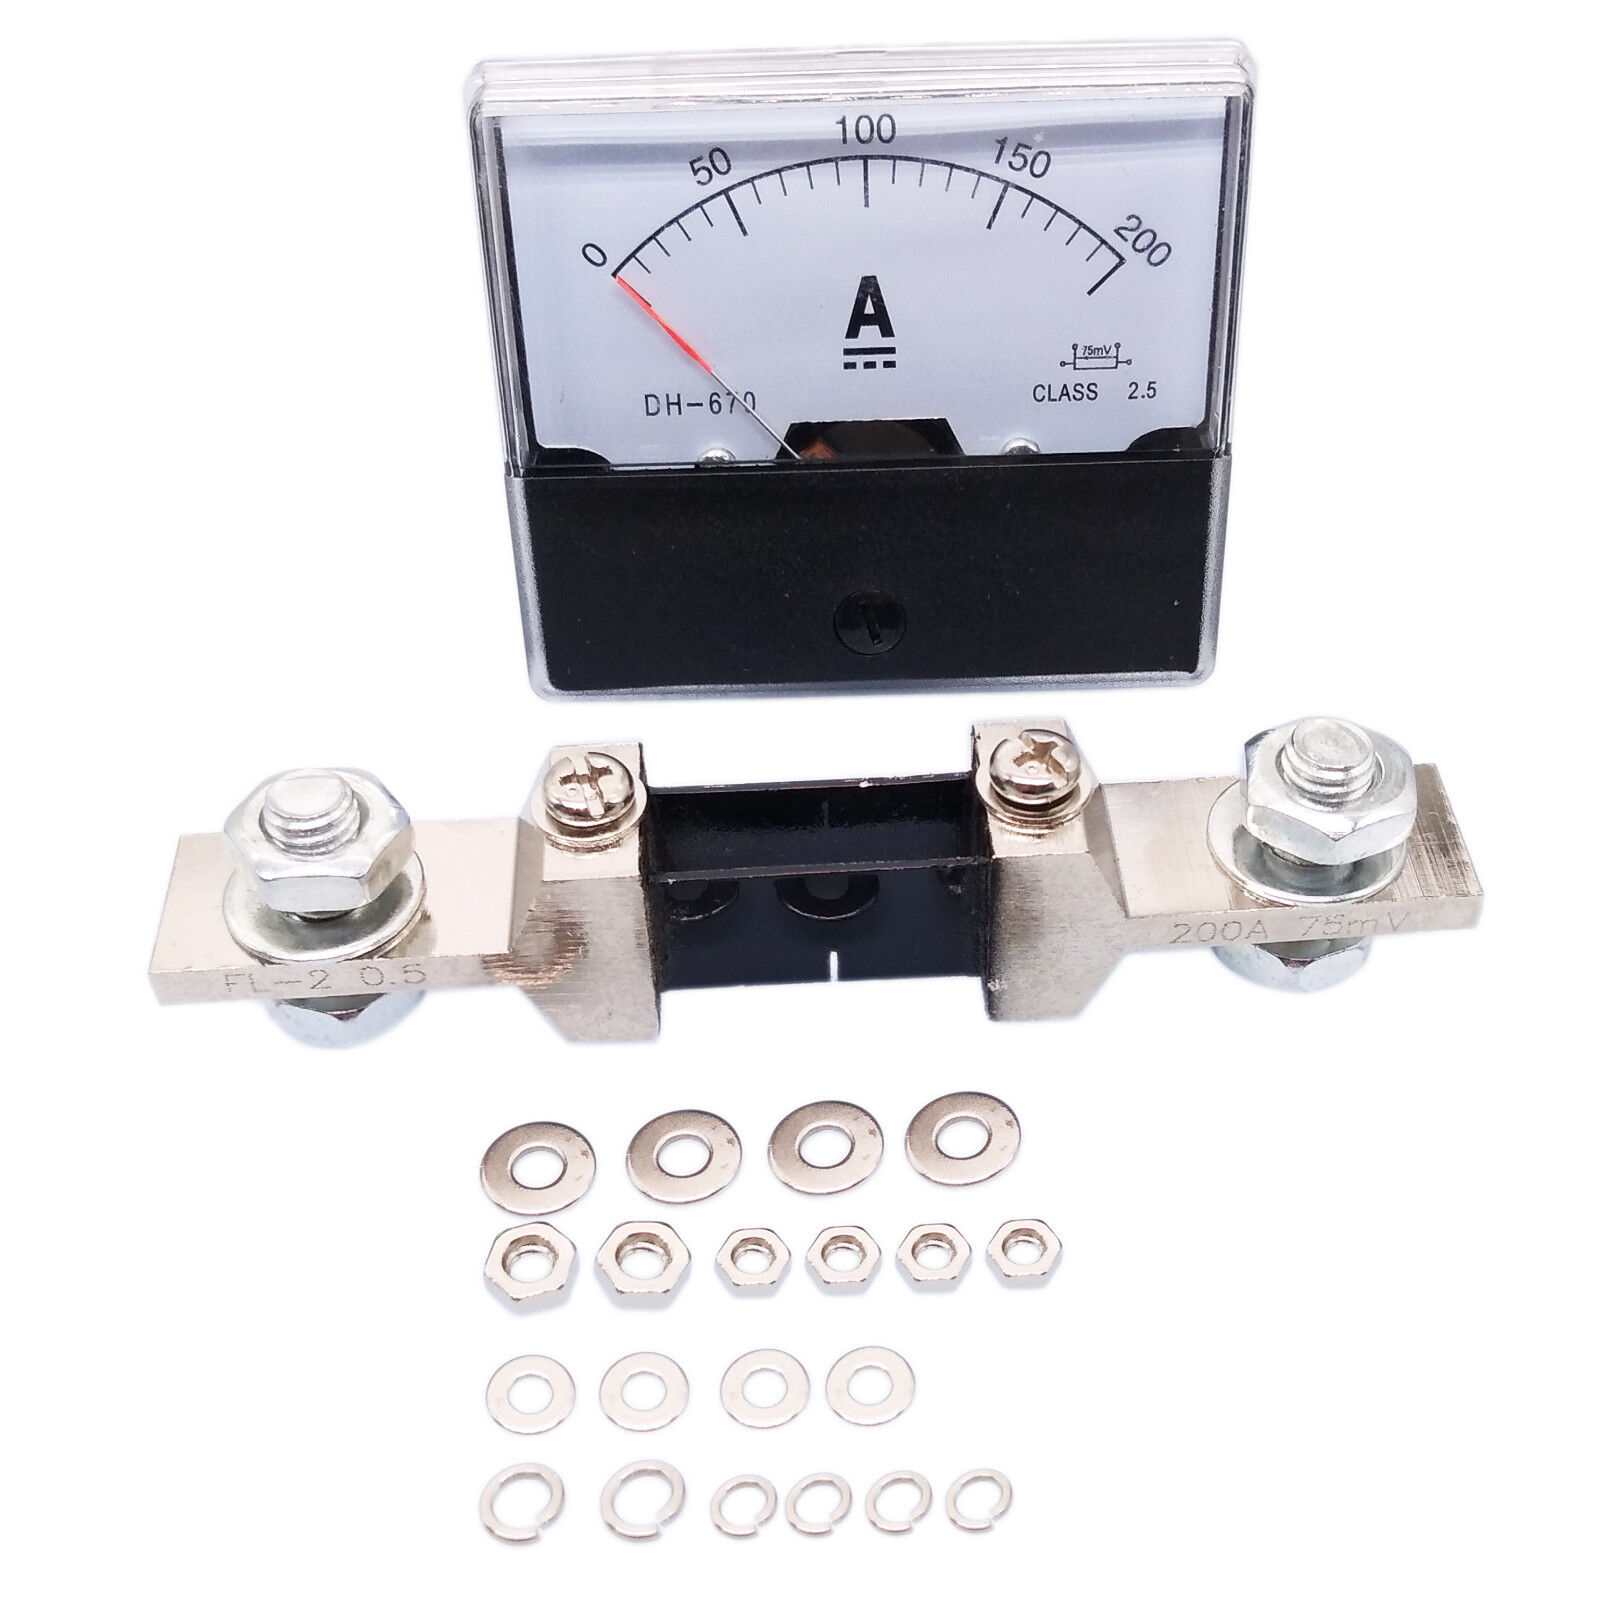 US Stock Analog Panel AMP Current Ammeter Meter Gauge DH-670 0-200A DC & Shunt